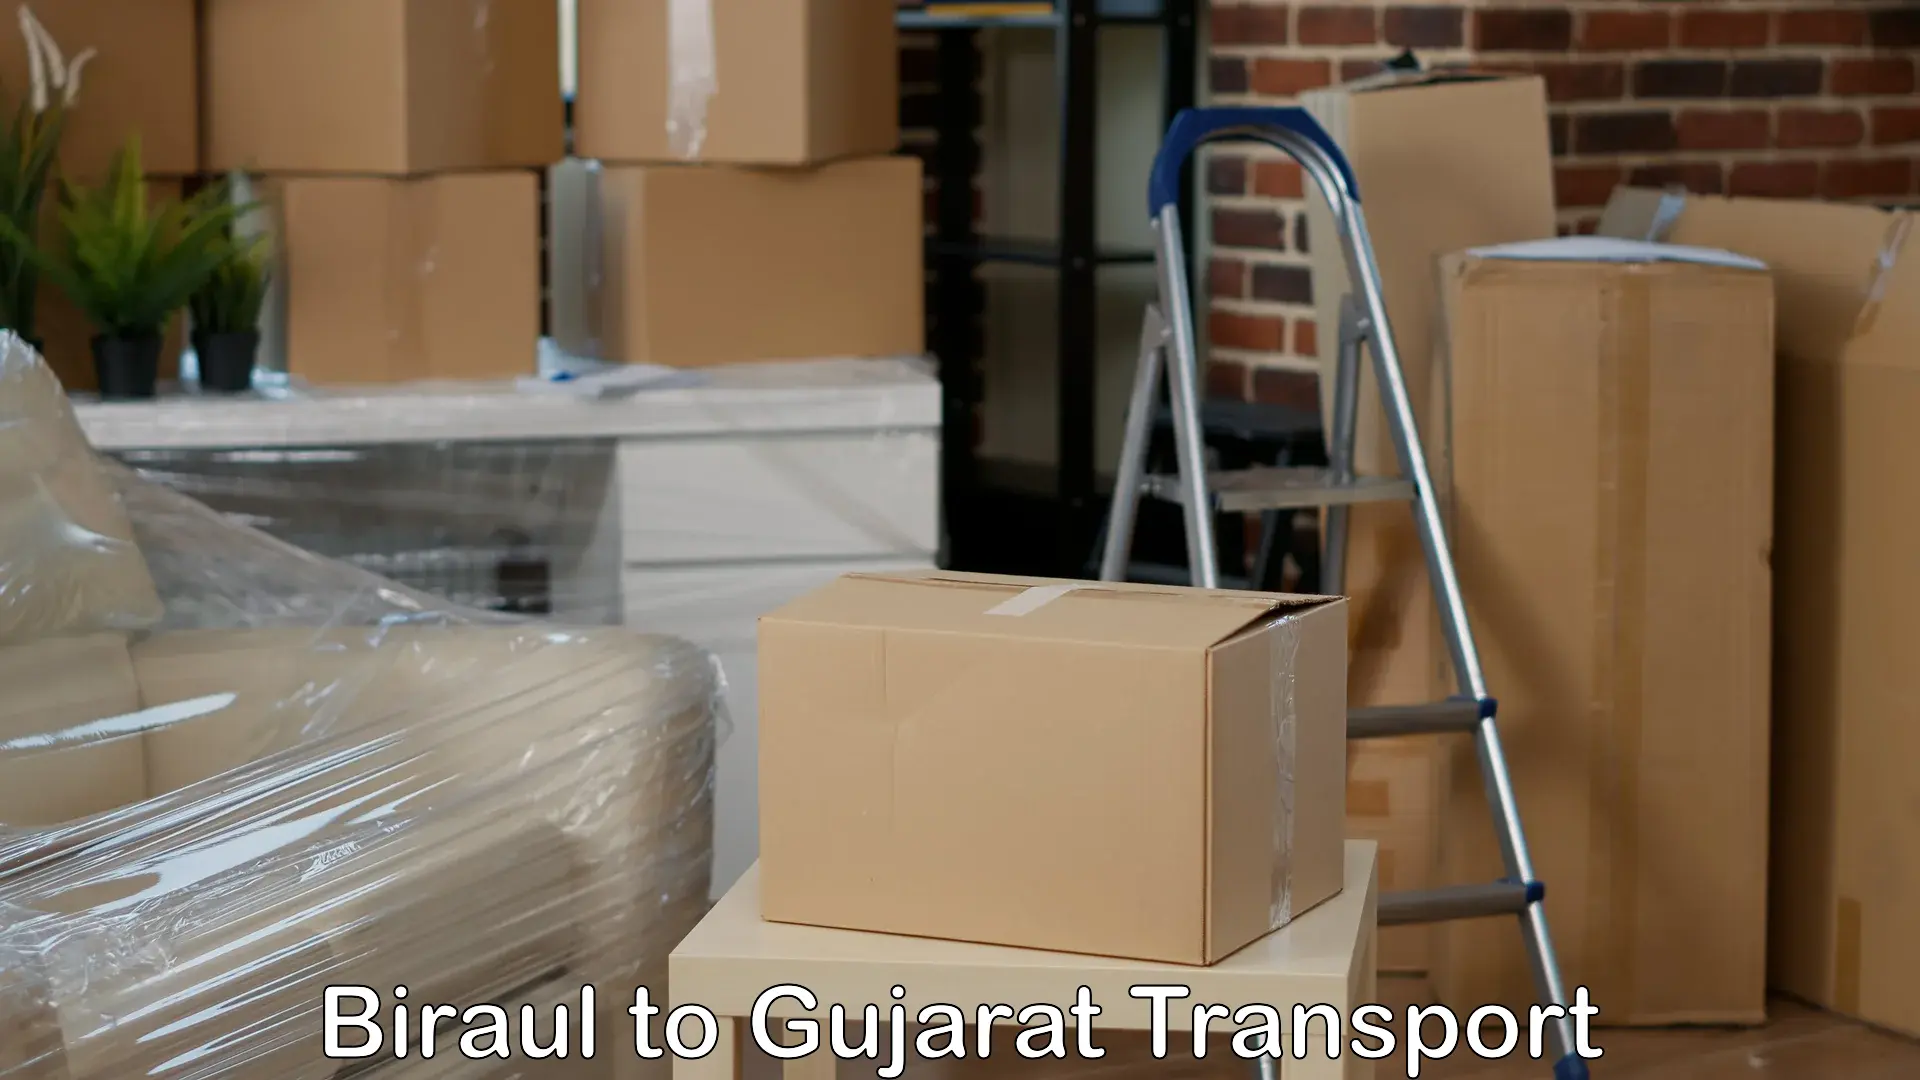 Truck transport companies in India Biraul to Gujarat